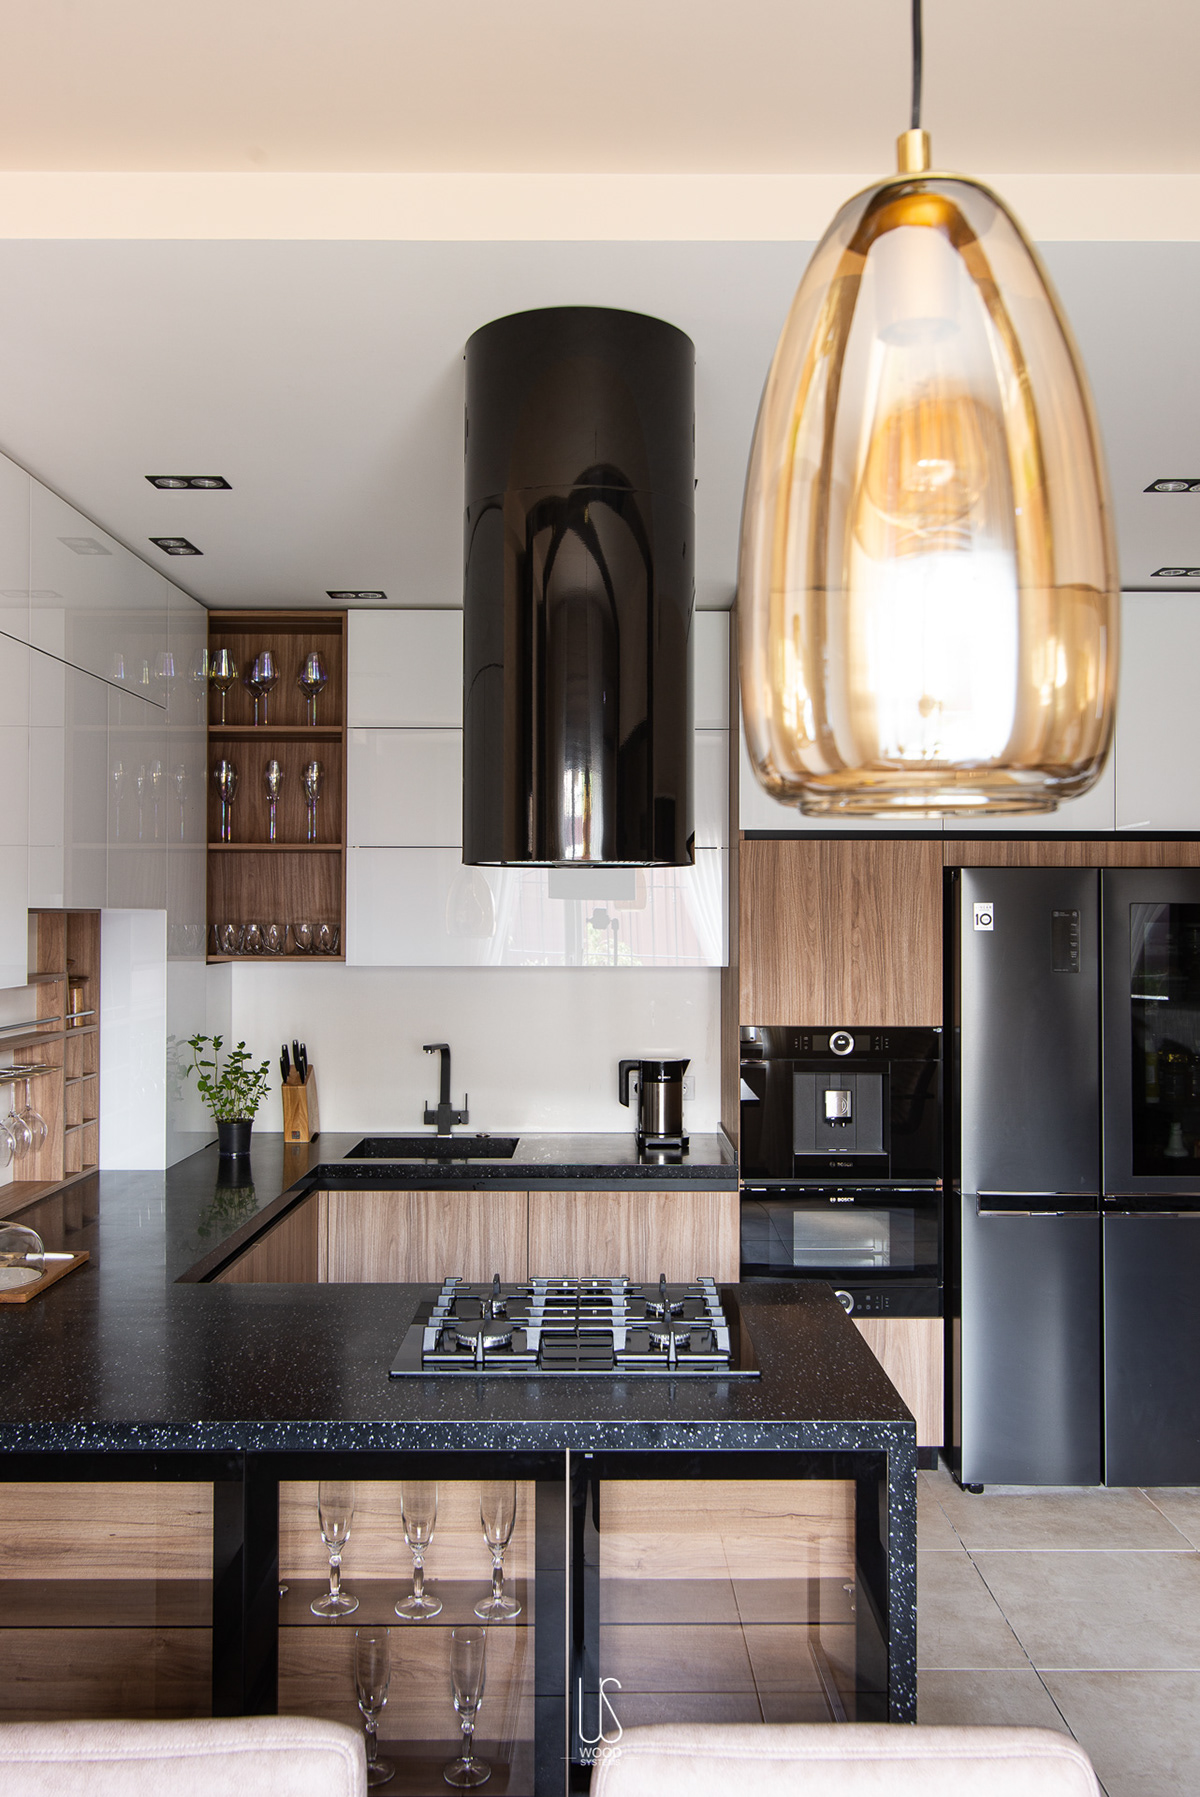 #interior #kitchen inspiration